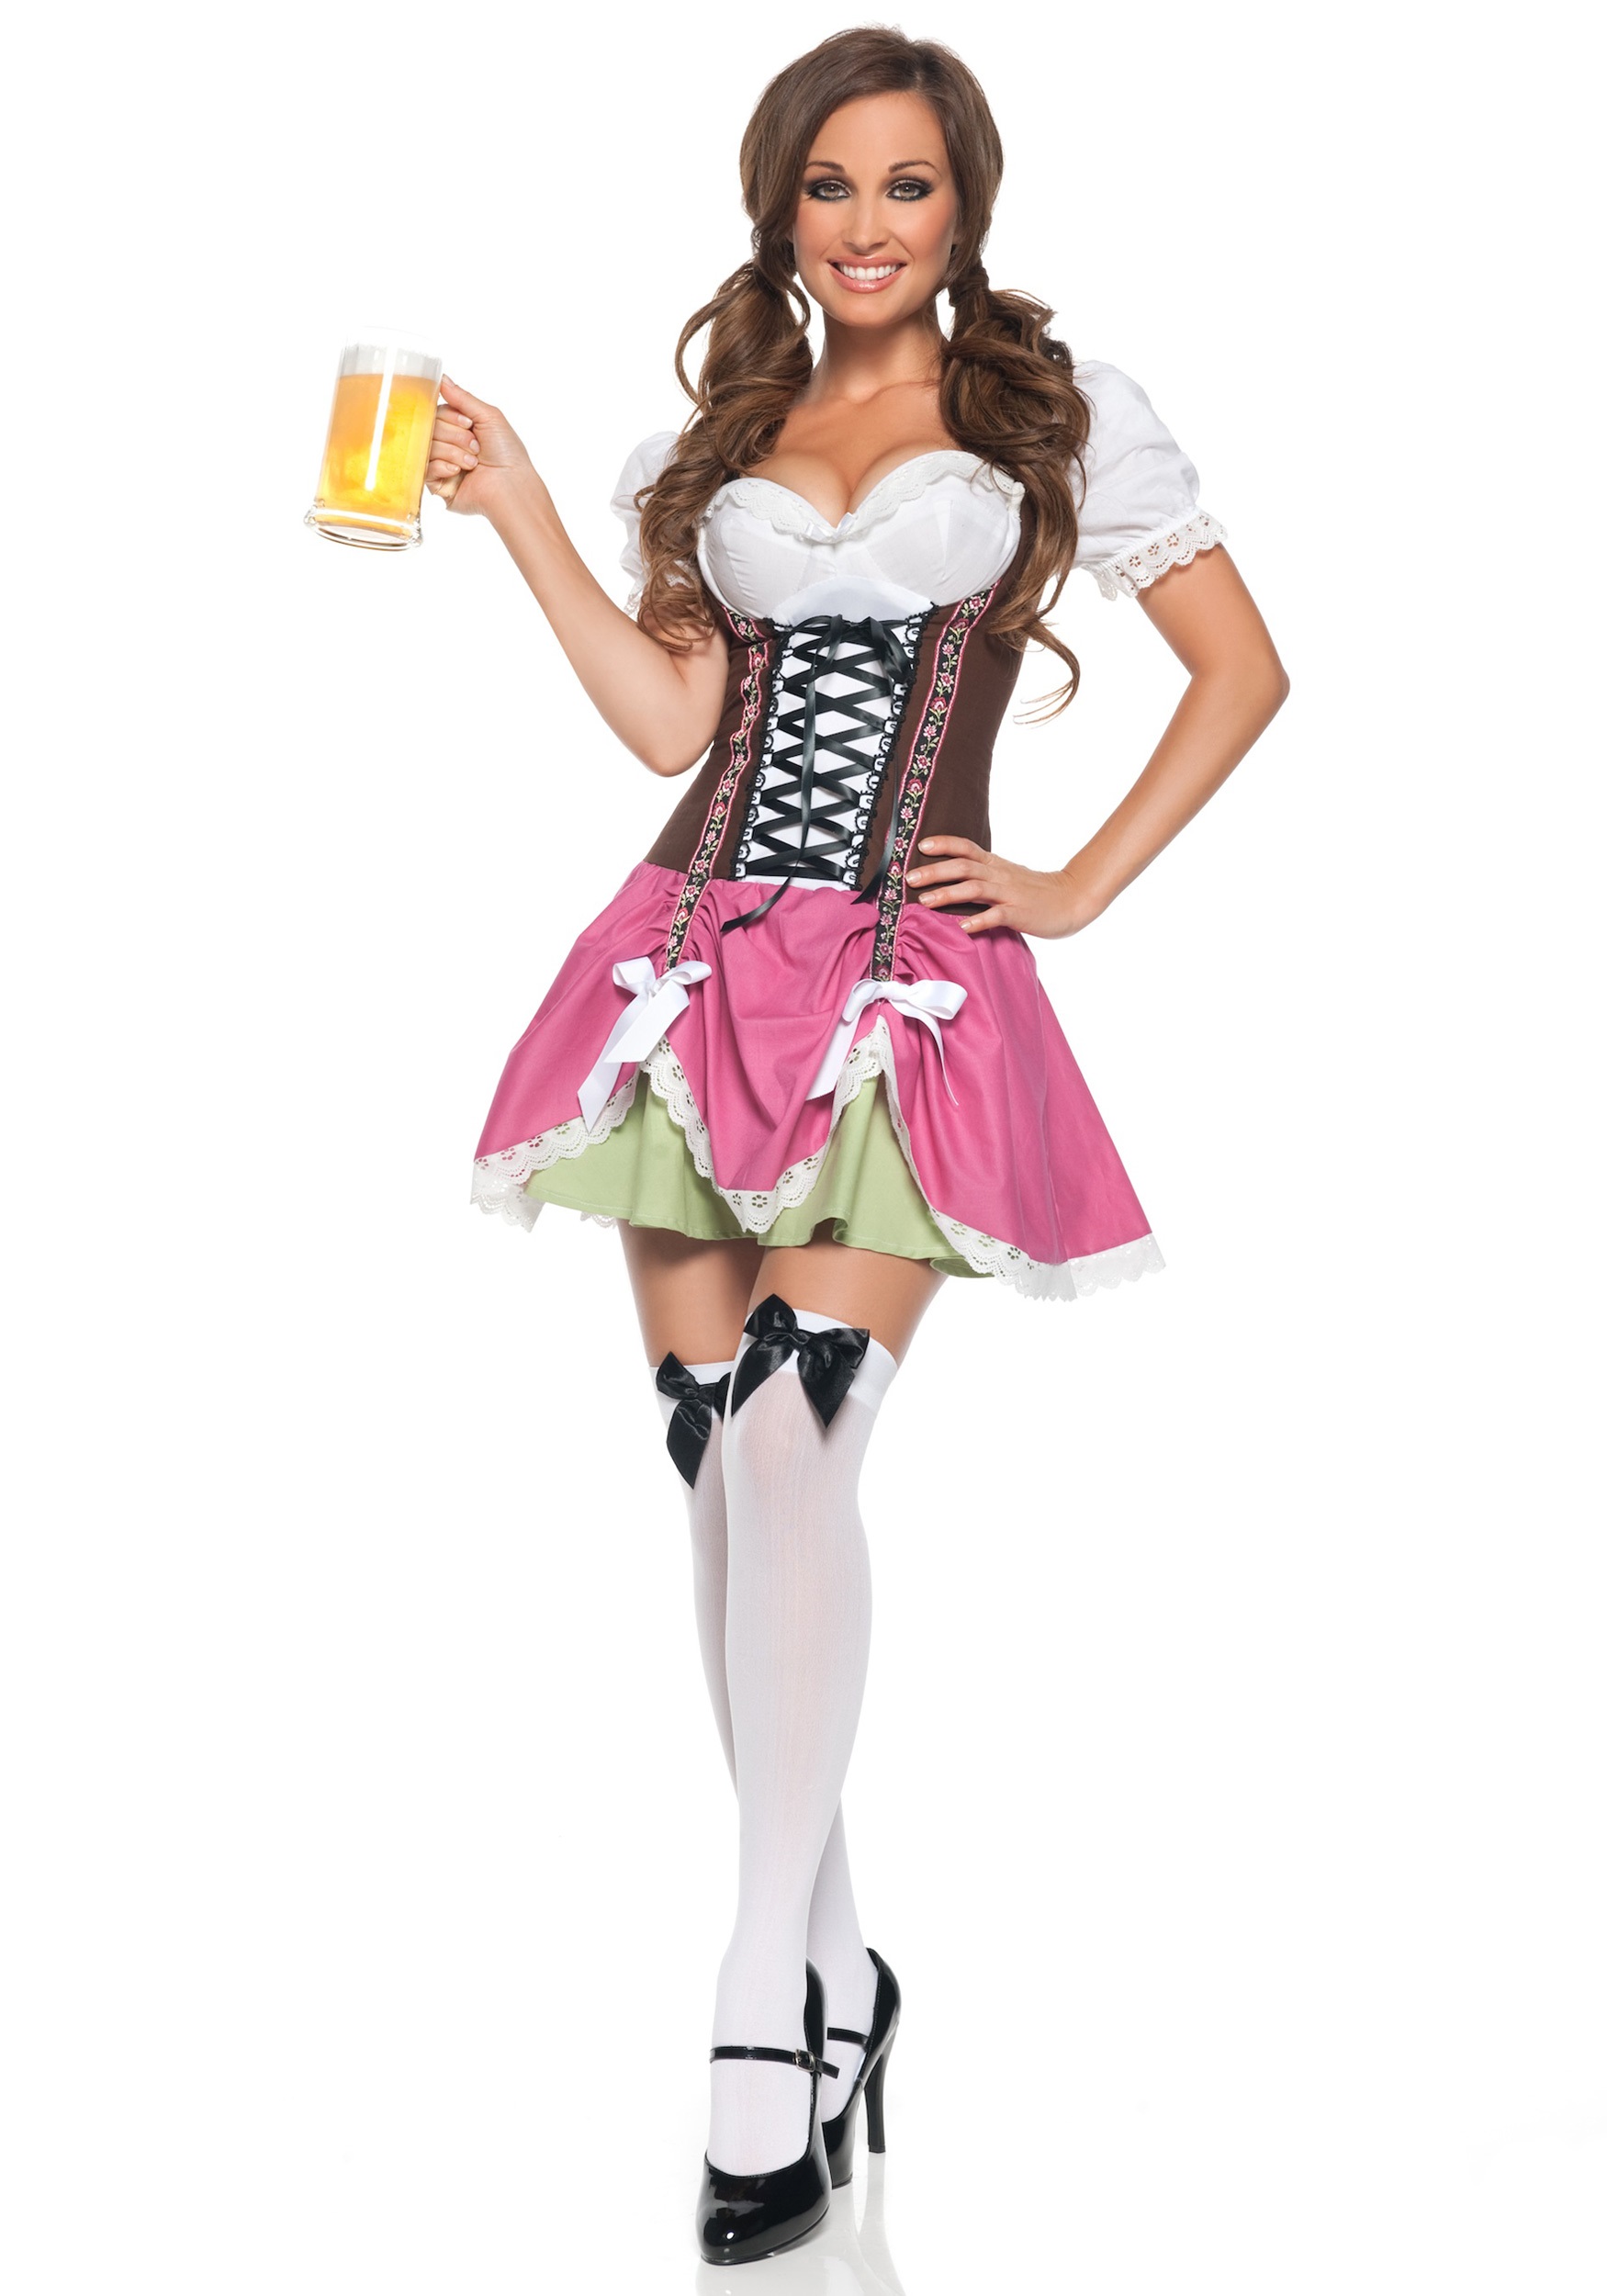 Adult Women's Sexy Bavarian Beer Girl Costume